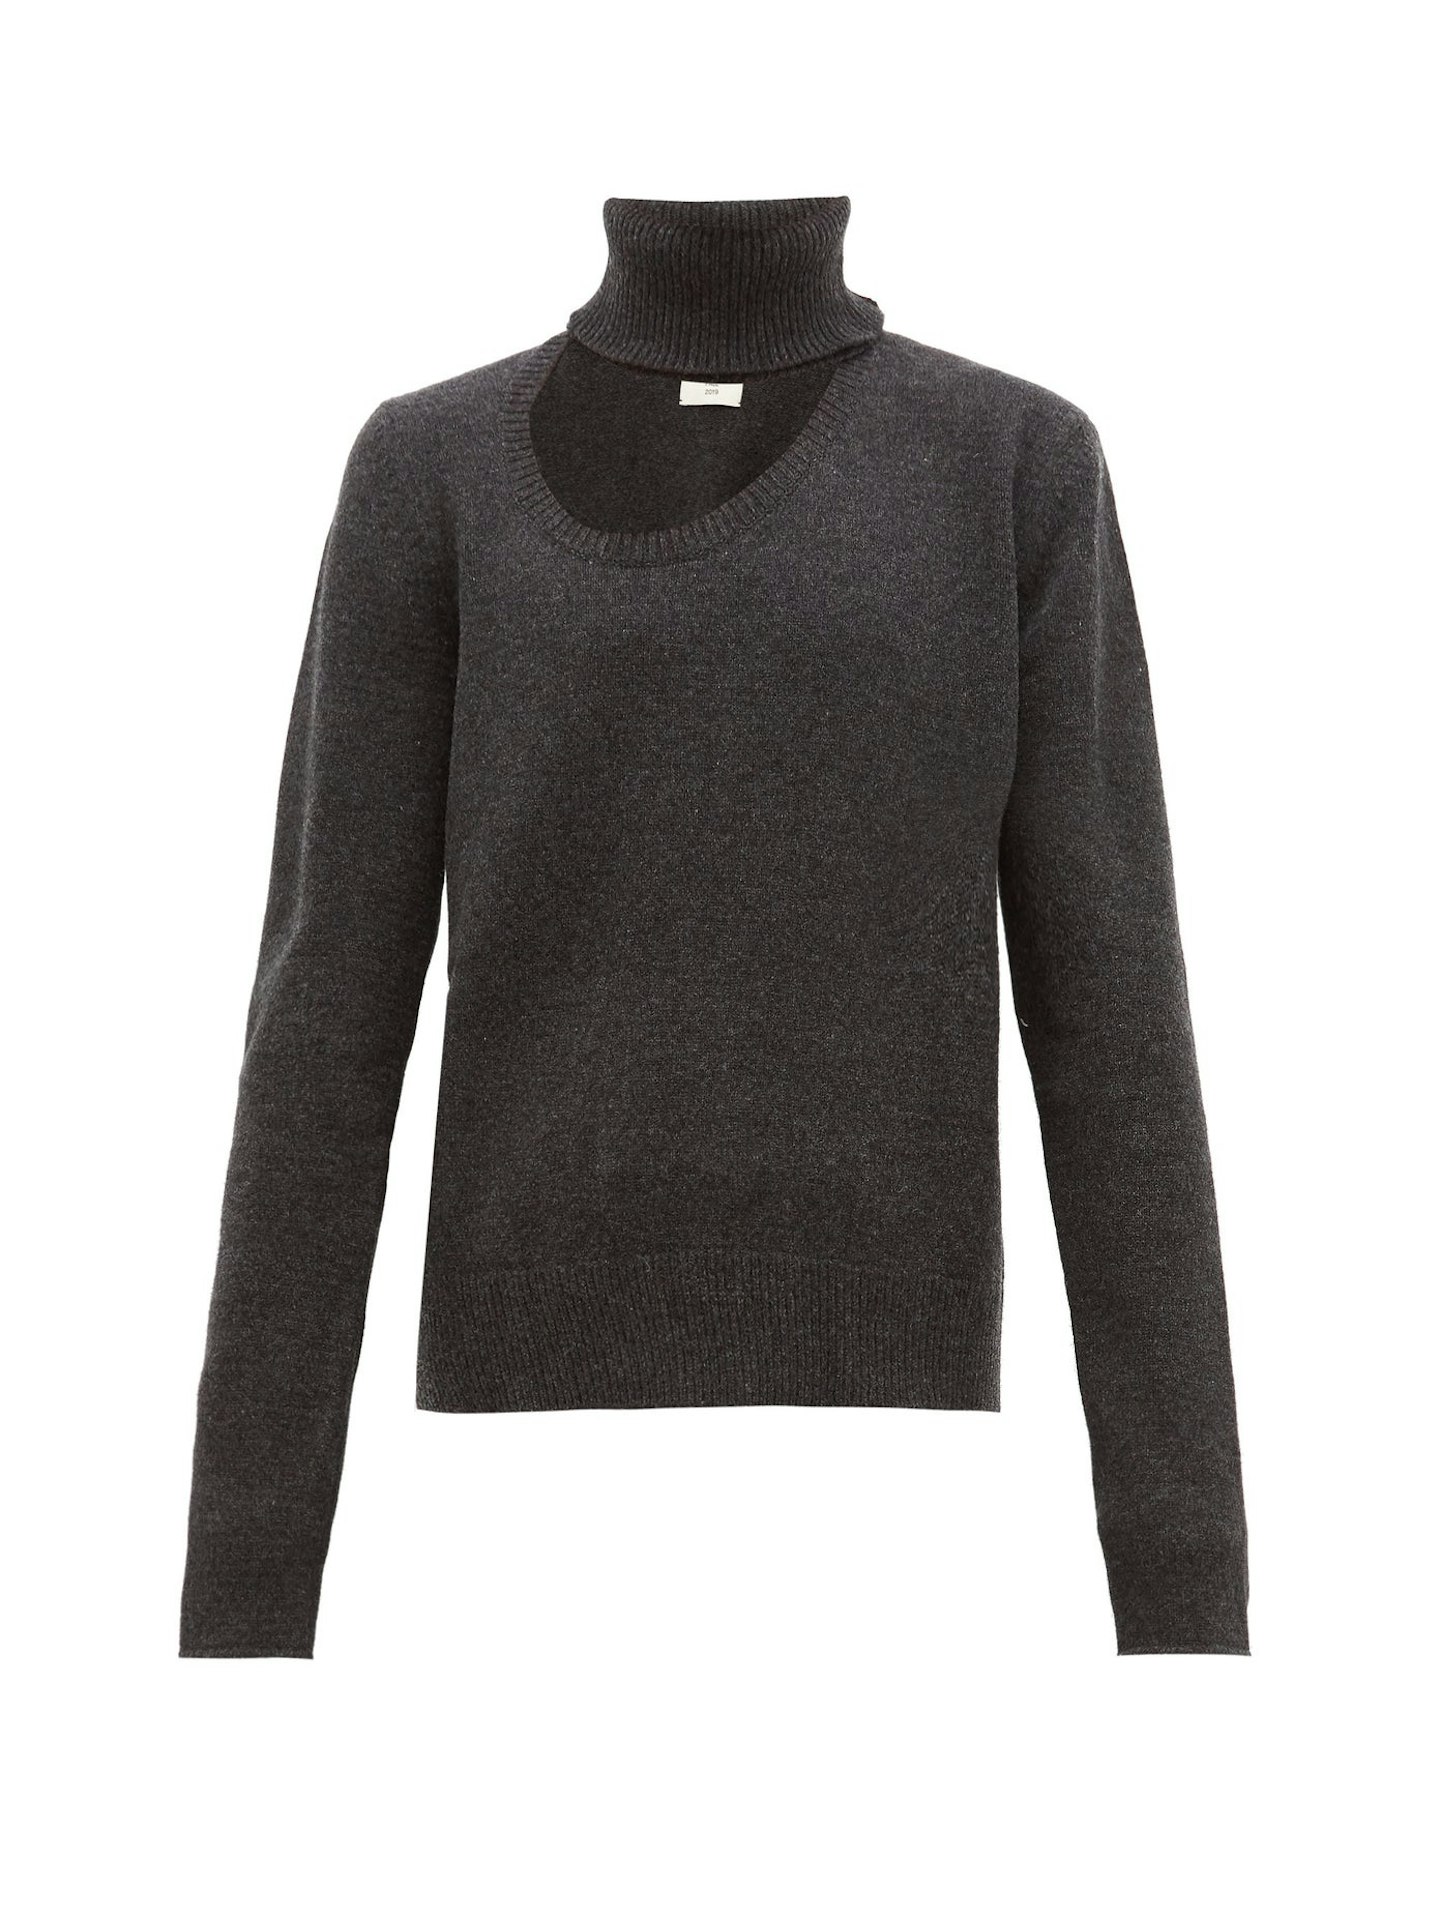 Cutout Cashmere Sweater, £865, Bottega Veneta at Browns Fashion